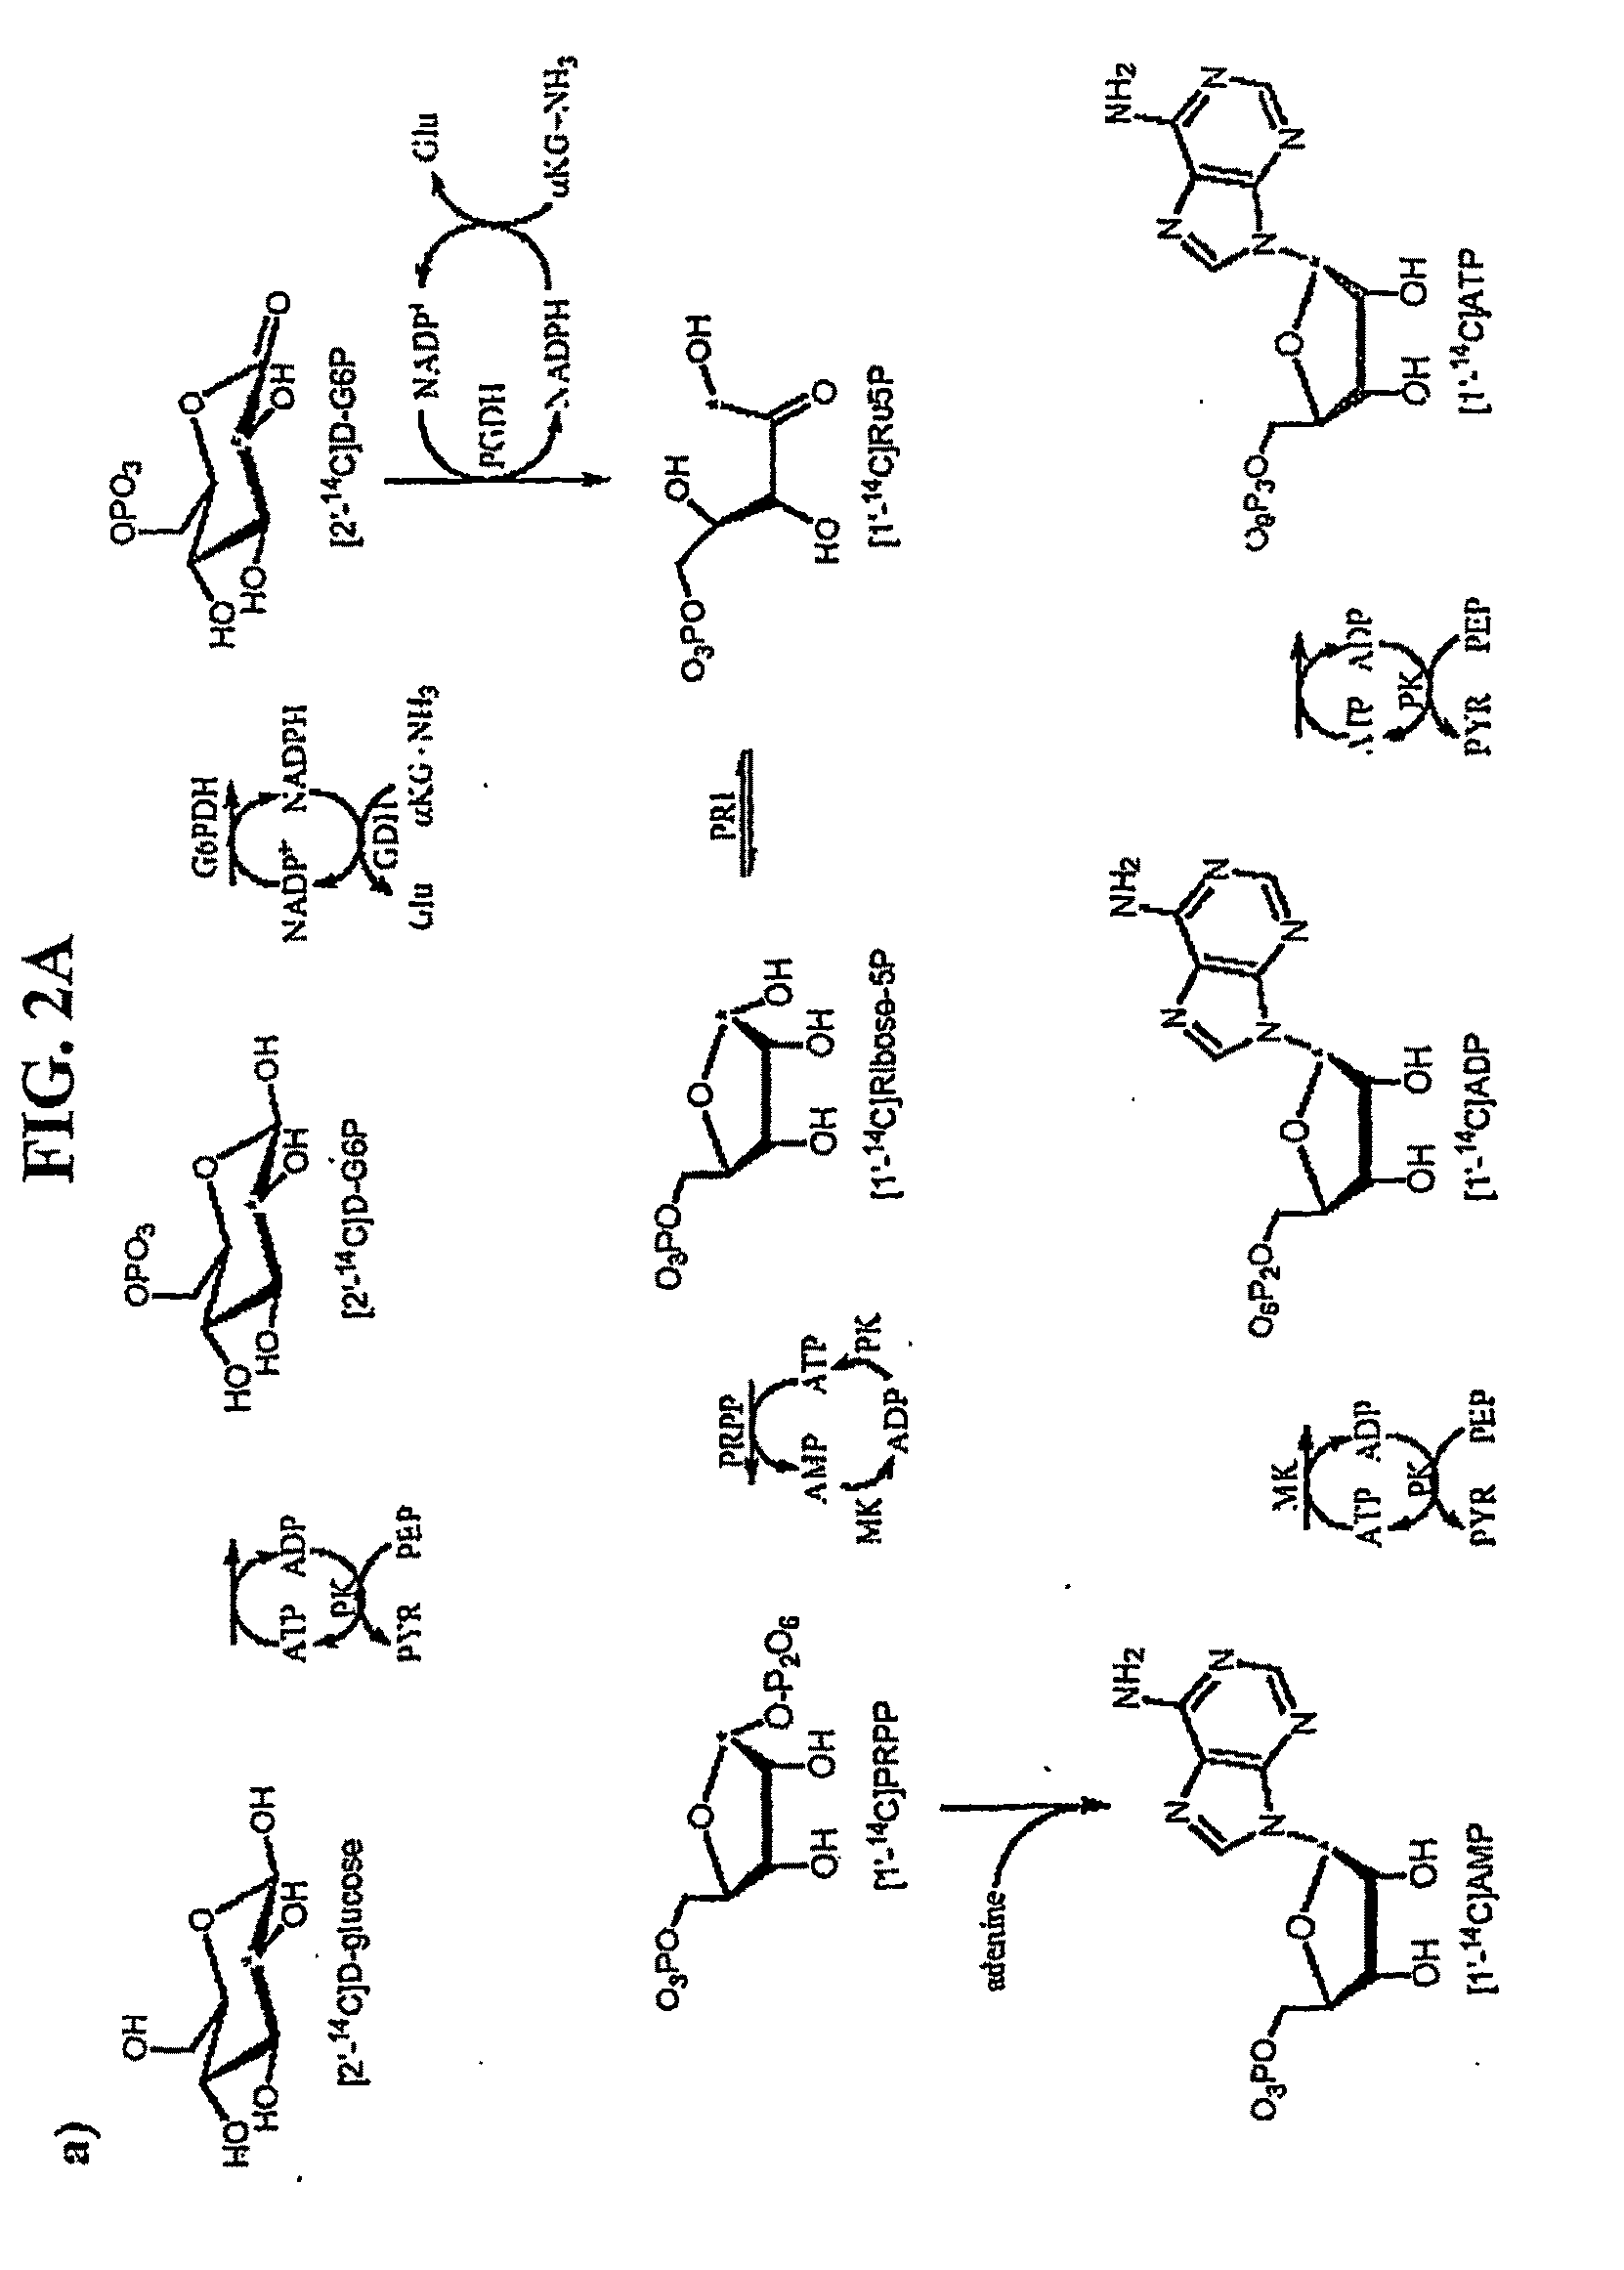 Transition state sturcture of 5'-methylthioadenosine/s-adenosylhomocysteine nucleosidases